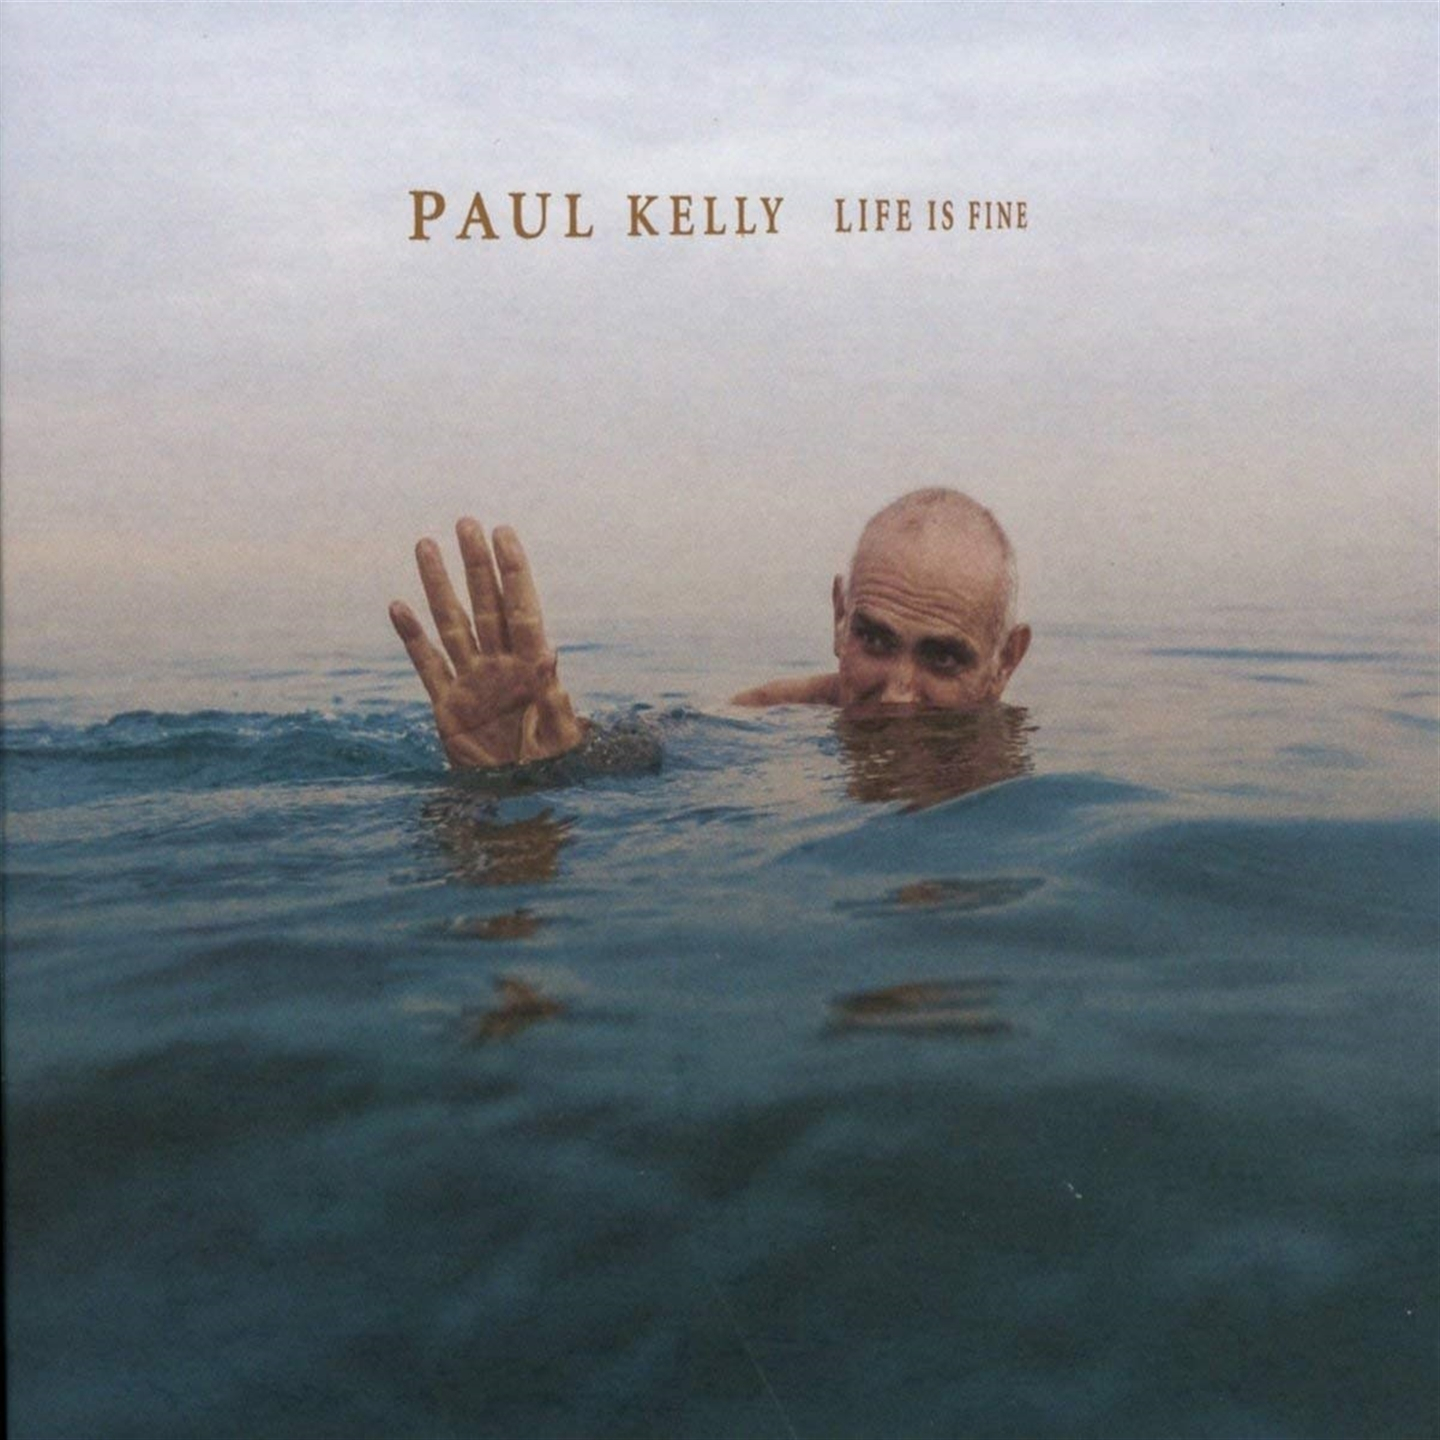 Paul Kelly - Life Is Fine [Lp] - Foto 1 di 1